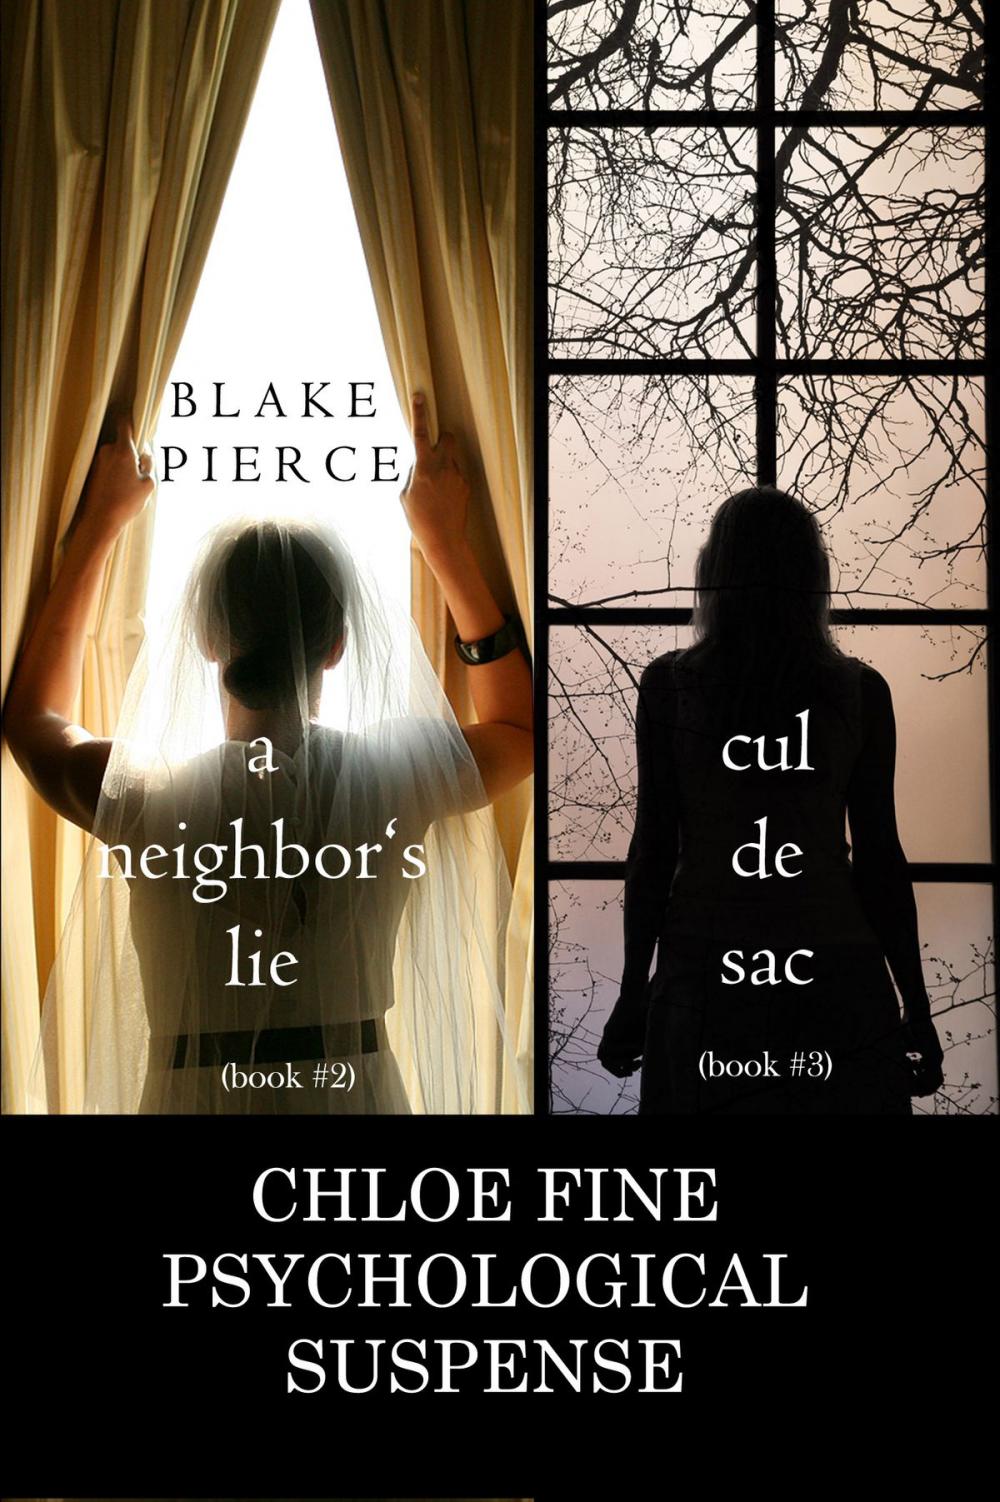 Big bigCover of Chloe Fine Psychological Suspense Bundle: A Neighbor’s Lie (#2) and Cul de Sac (#3)